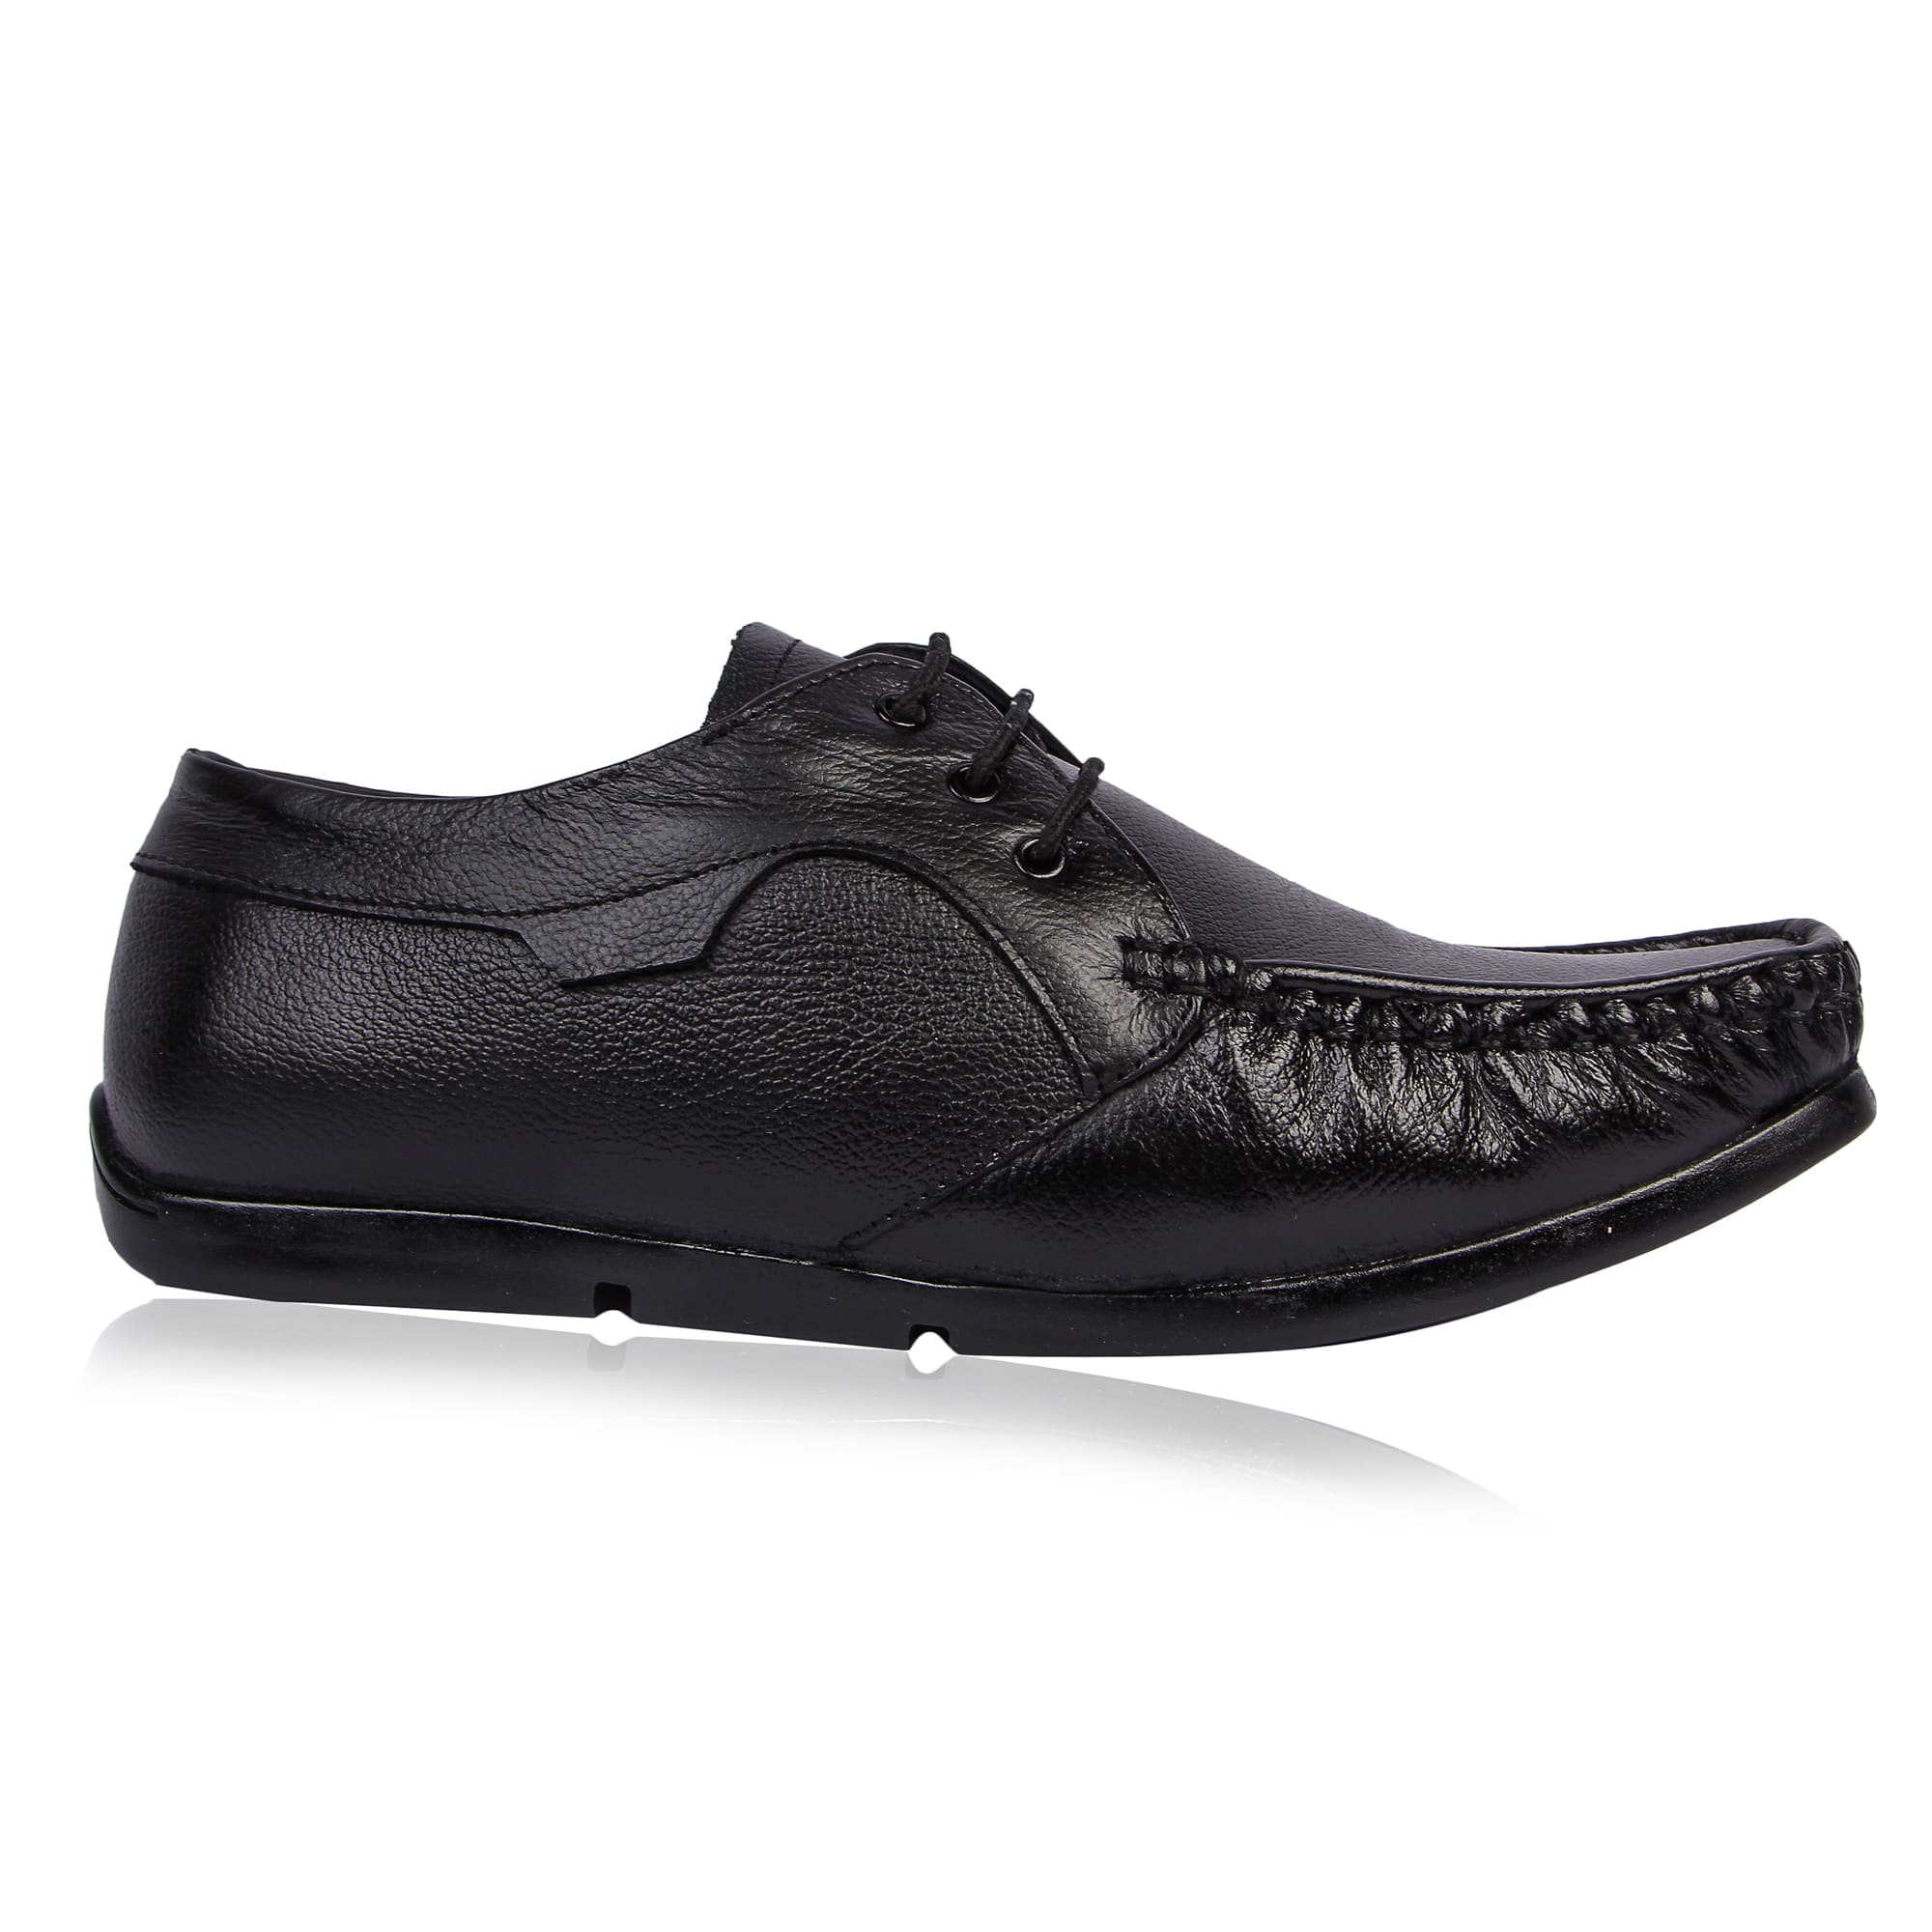 IMG_1637 | Online Store for Men Footwear in India